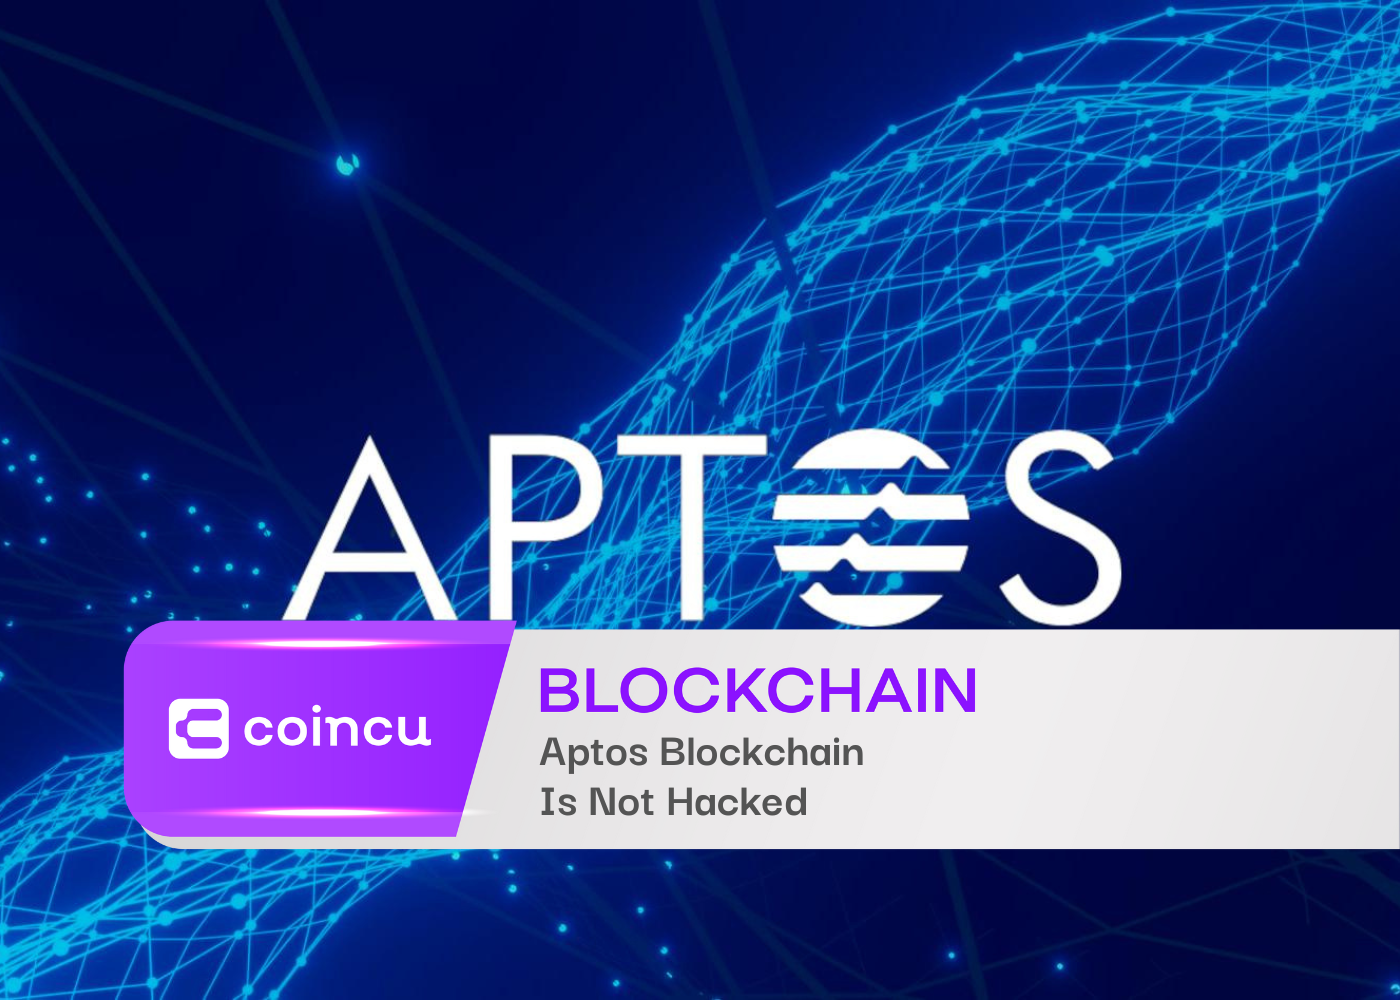 Aptos Blockchain